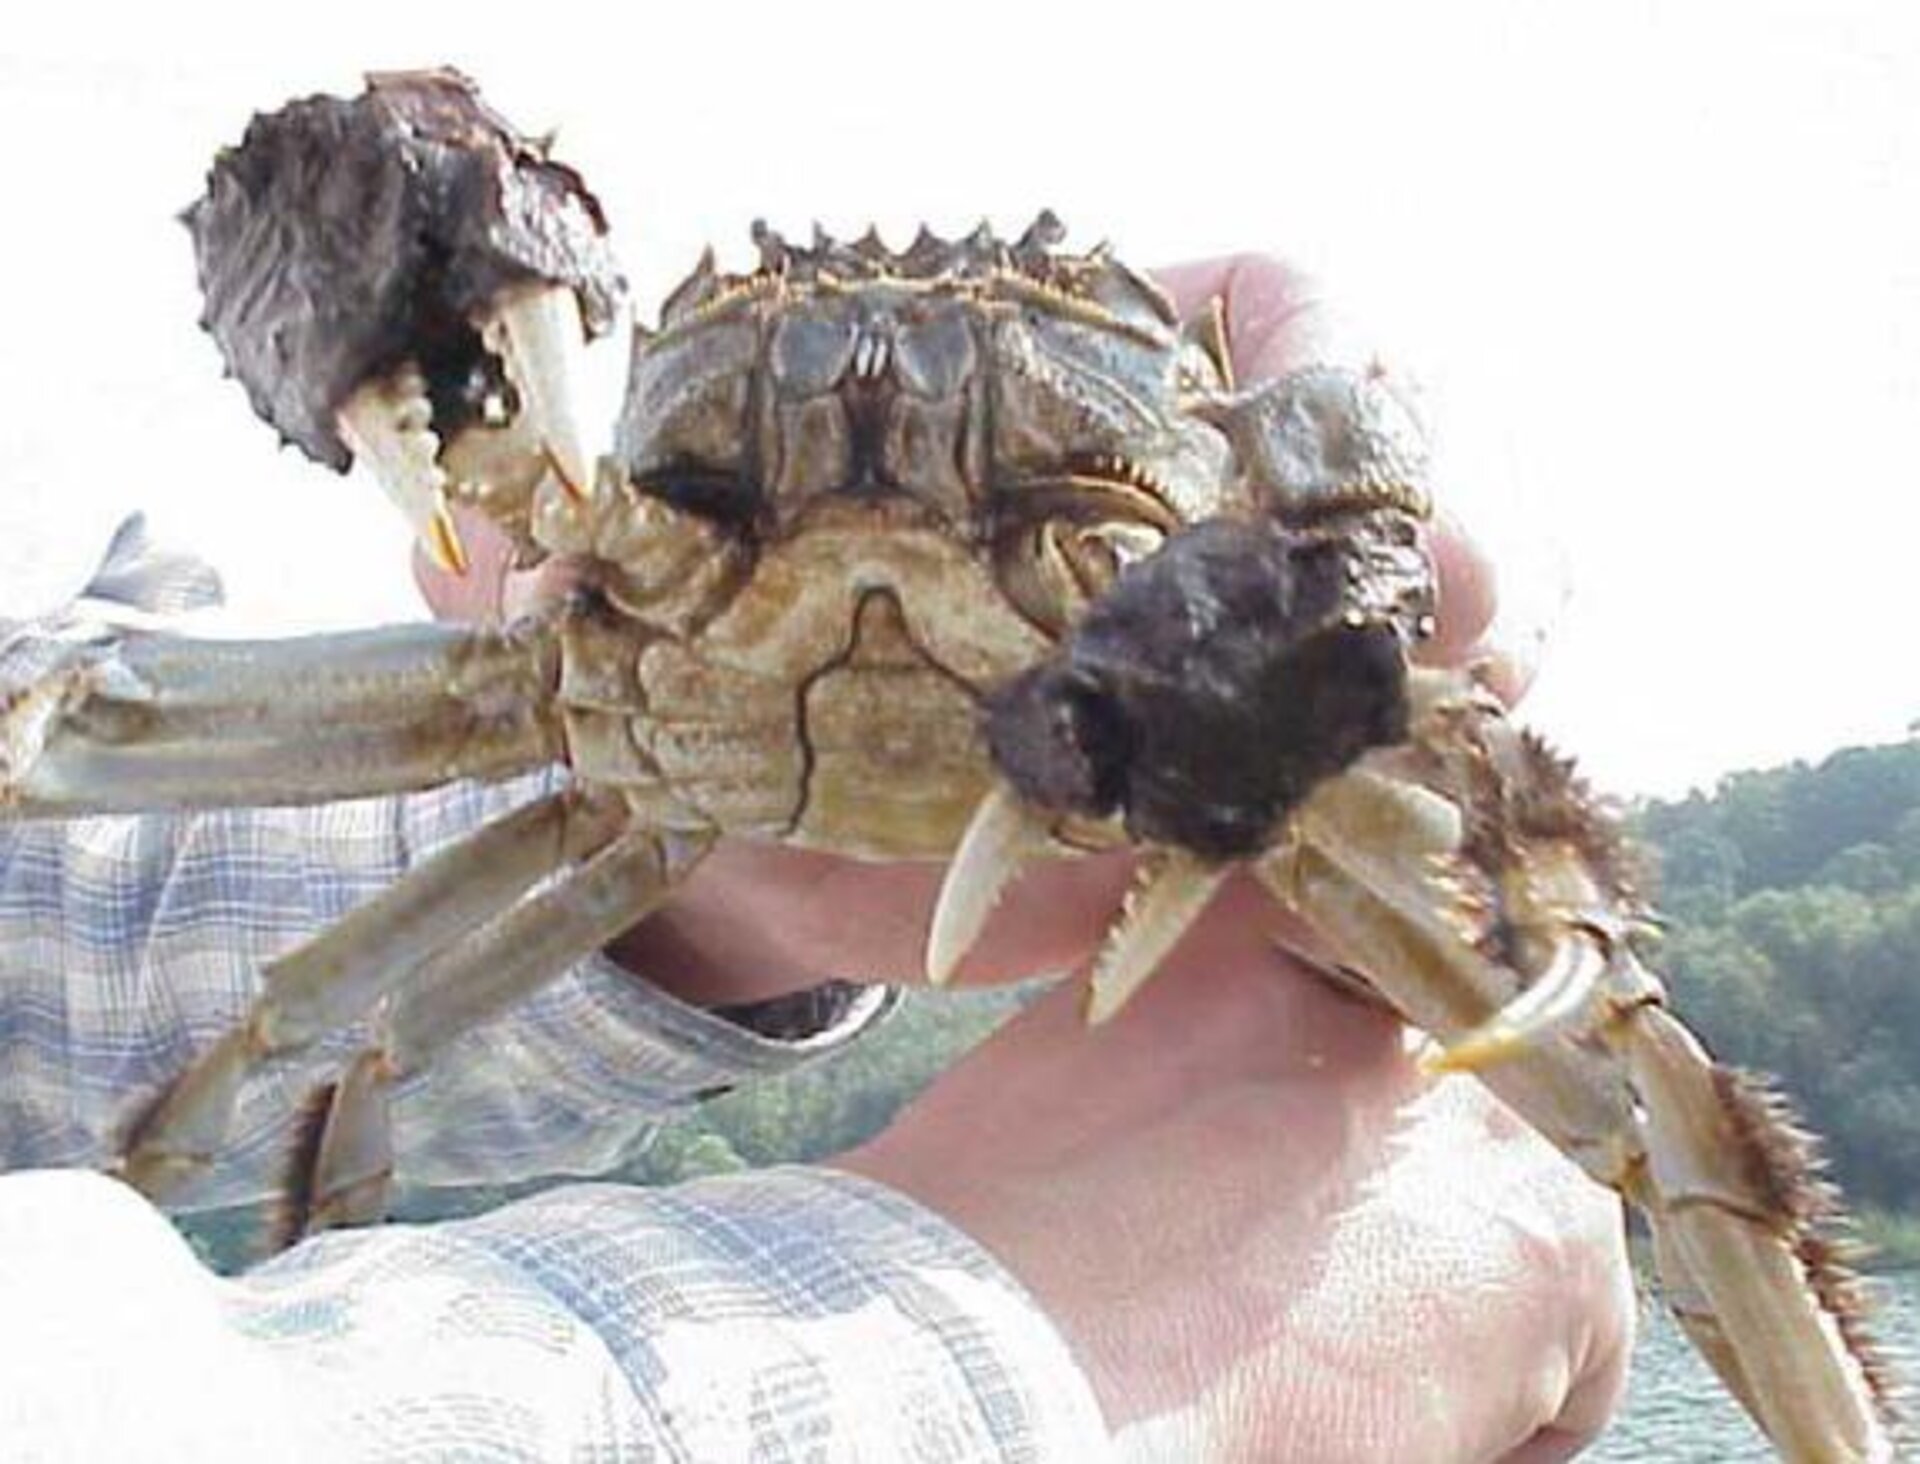 Hairy crab invasion